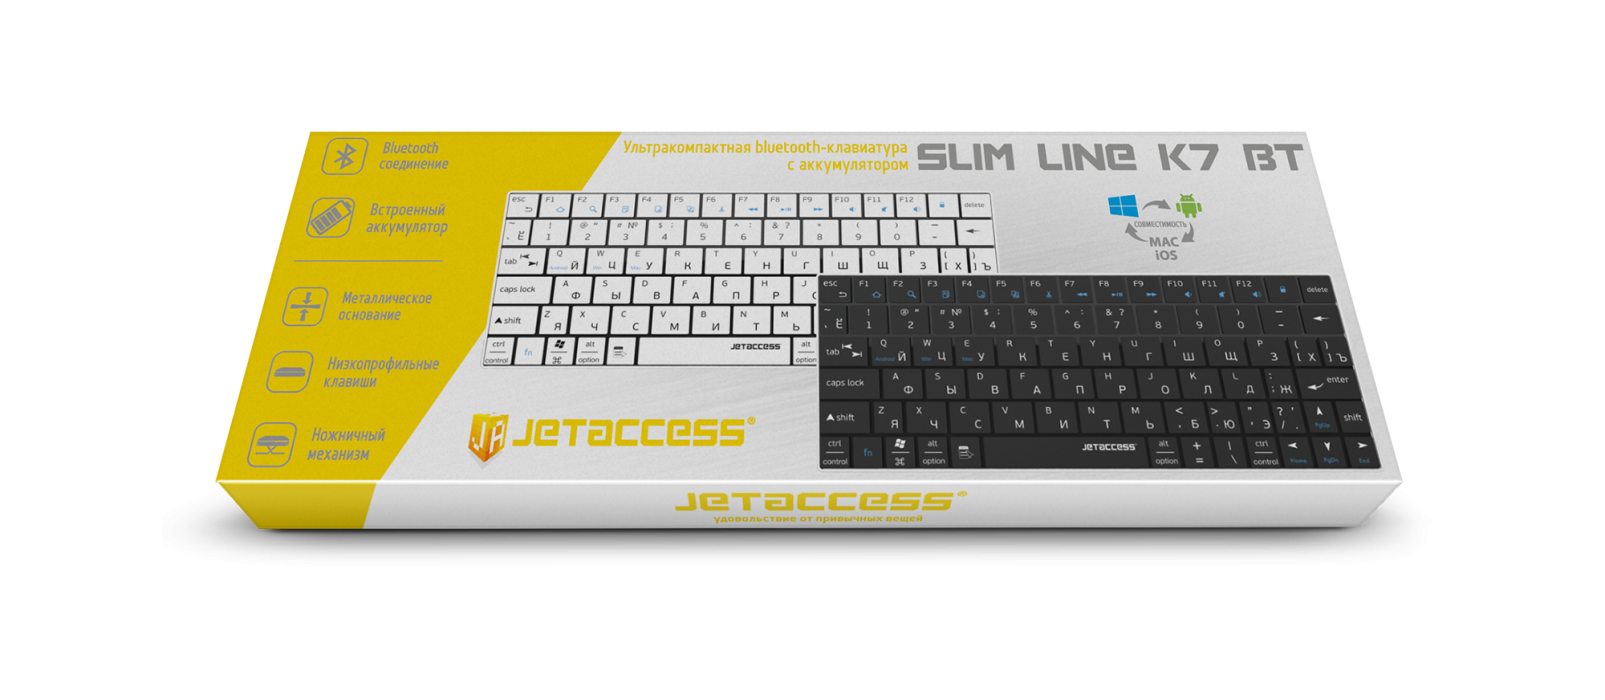 Ультракомпактная bluetooth-клавиатура с аккумулятором SLIM LINE K7 BT6